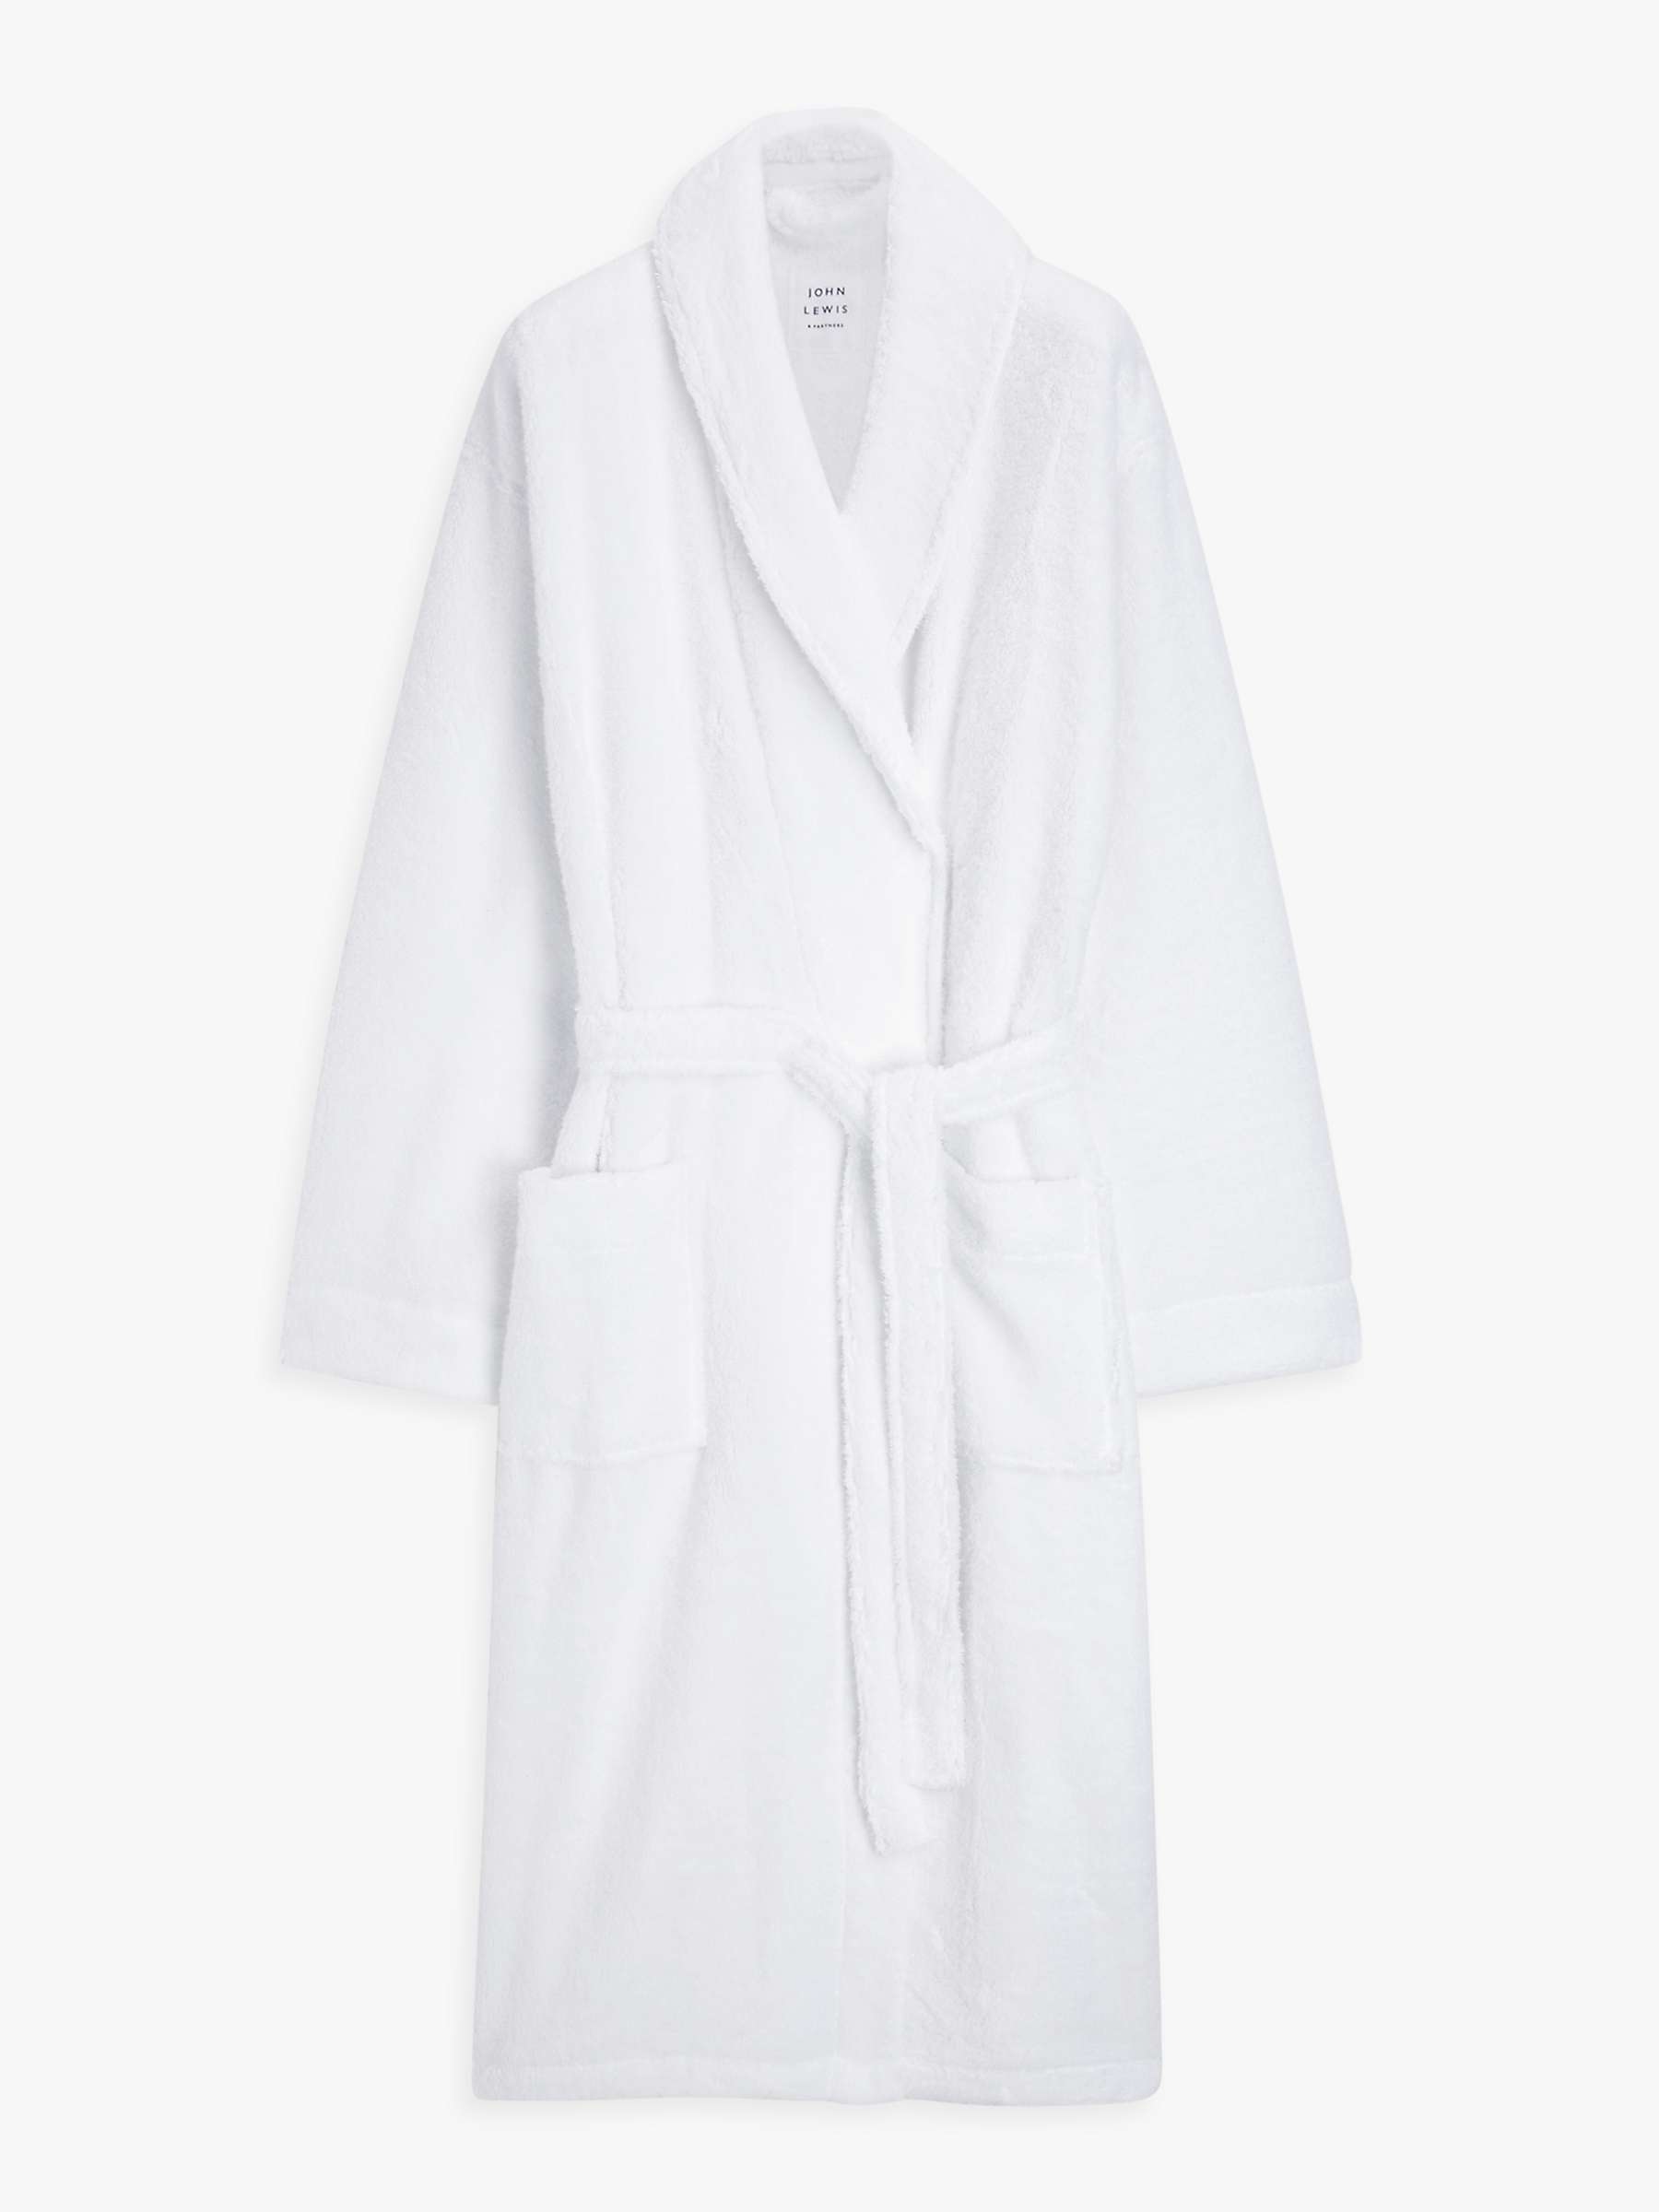 Buy John Lewis Premium Luxury Towelling Robe Online at johnlewis.com